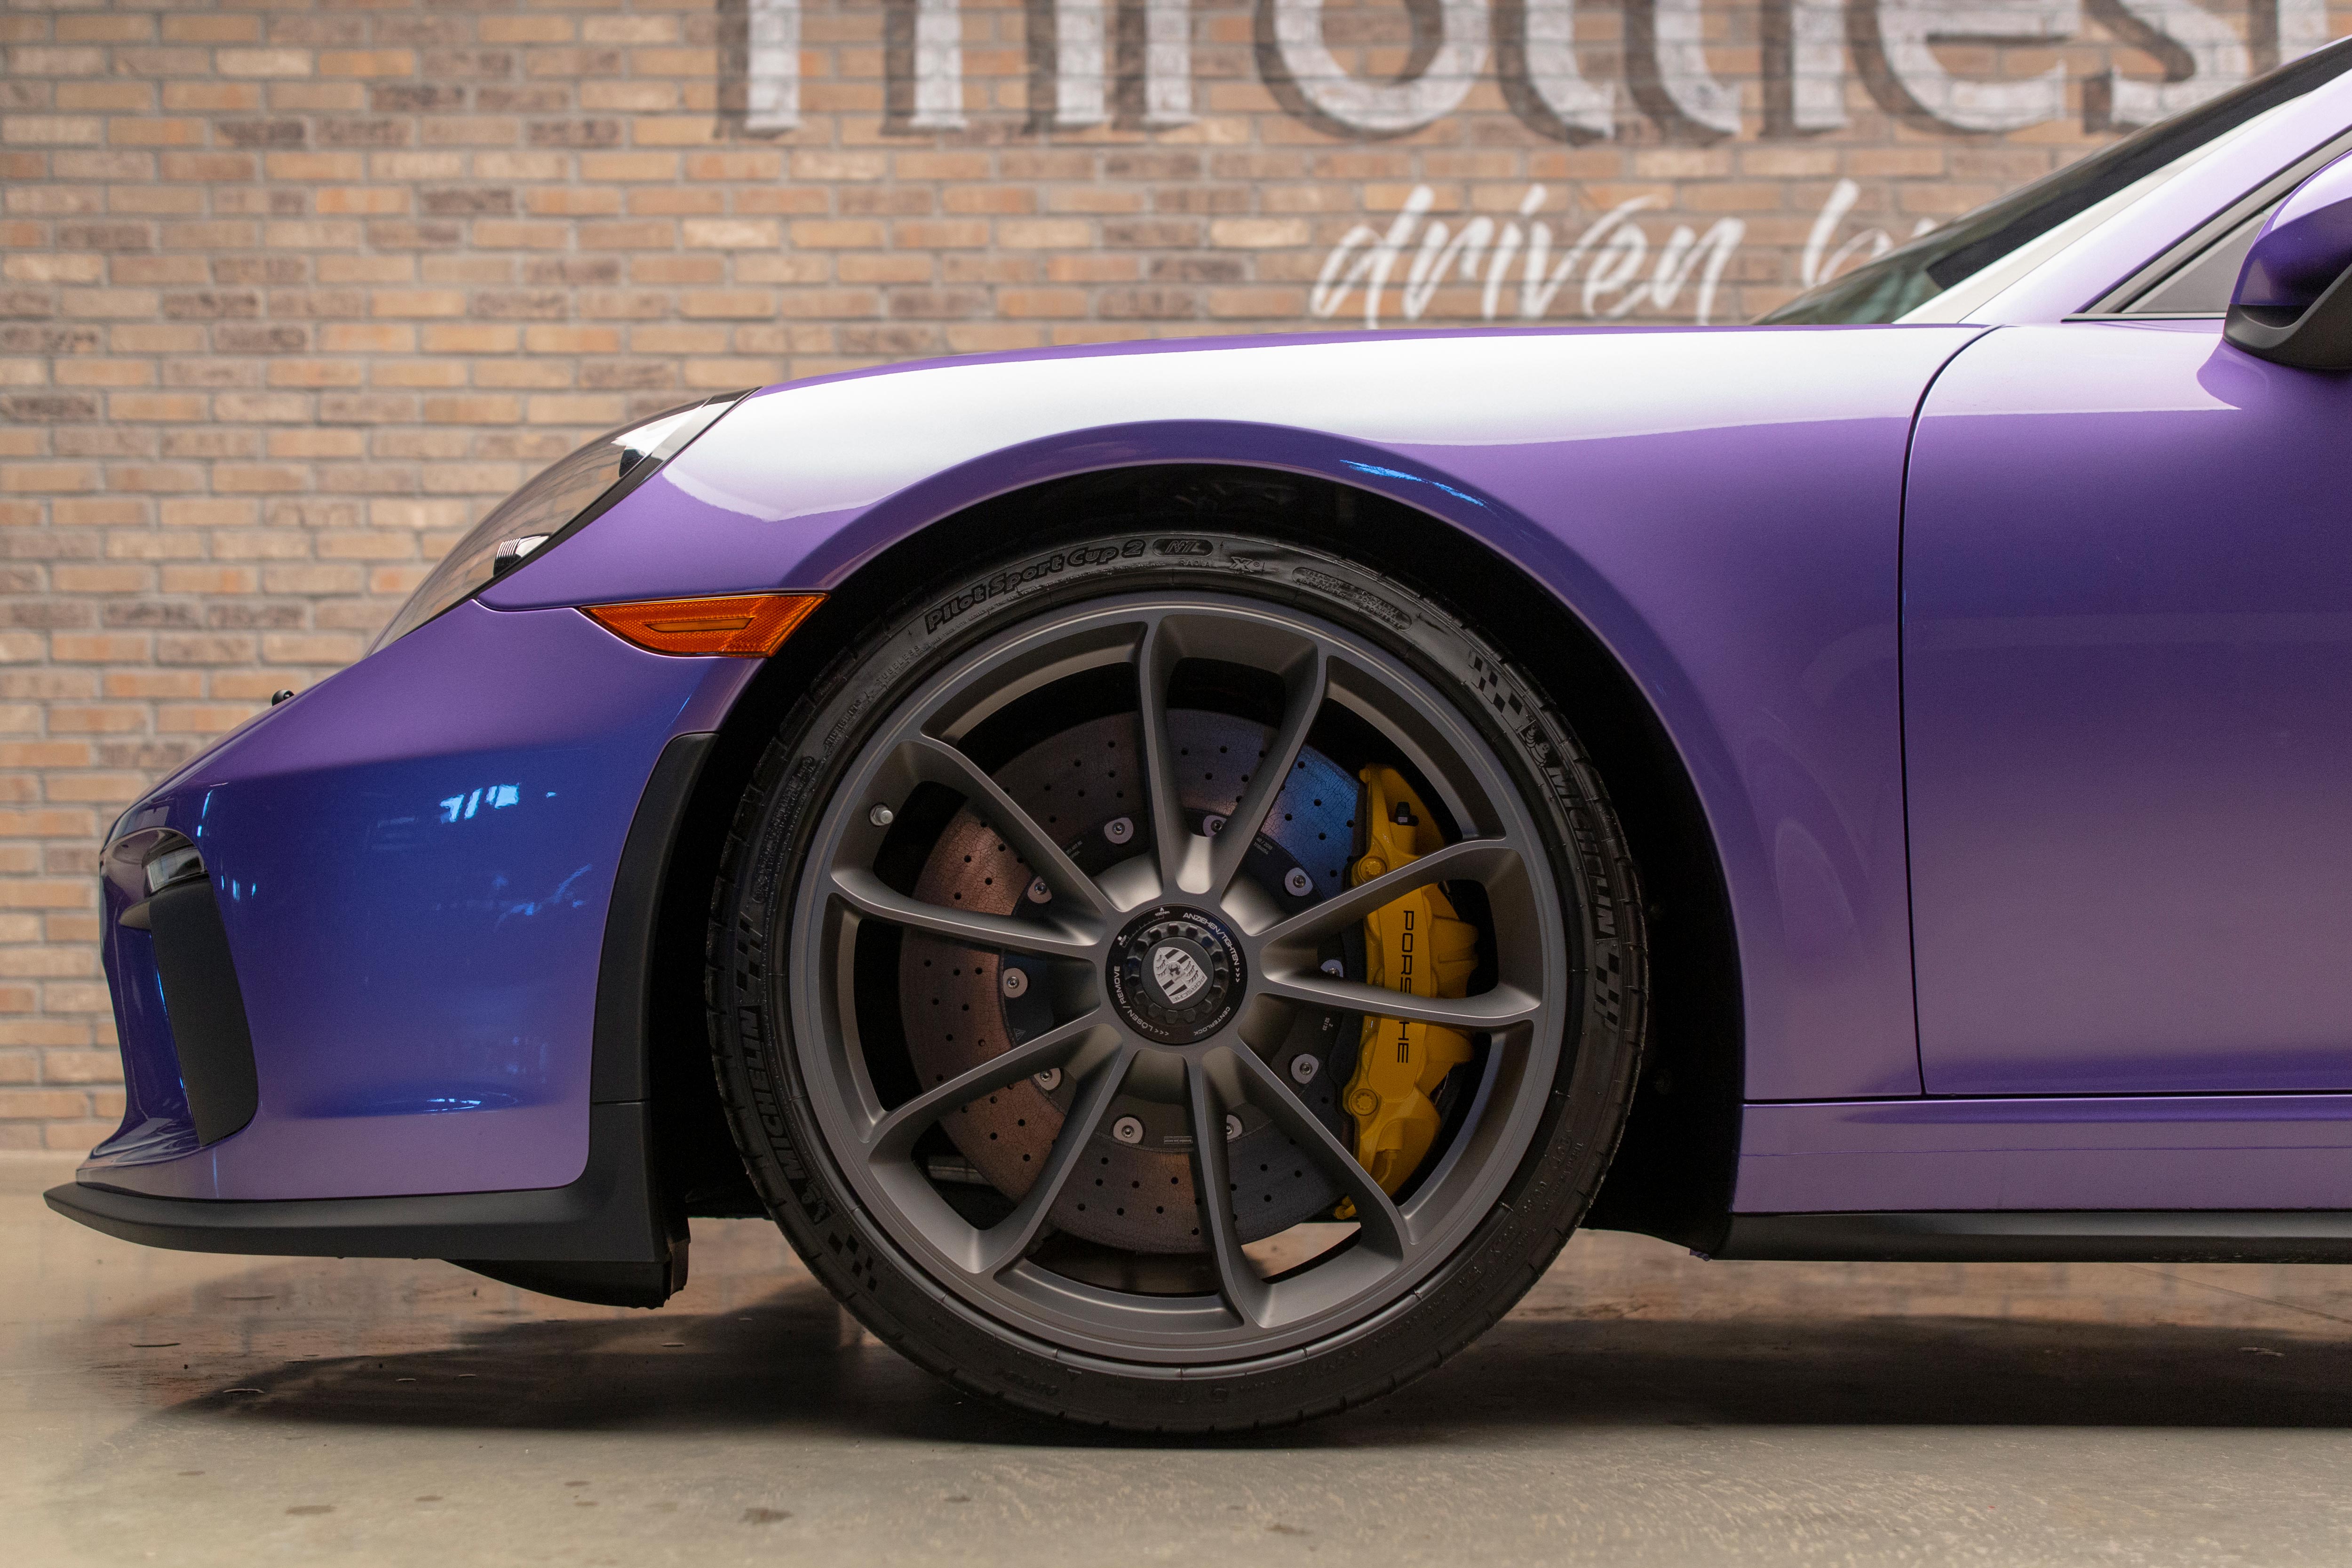 Porsche Porsche 911 Wheels Car Sports Car Purple Cars 5000x3333